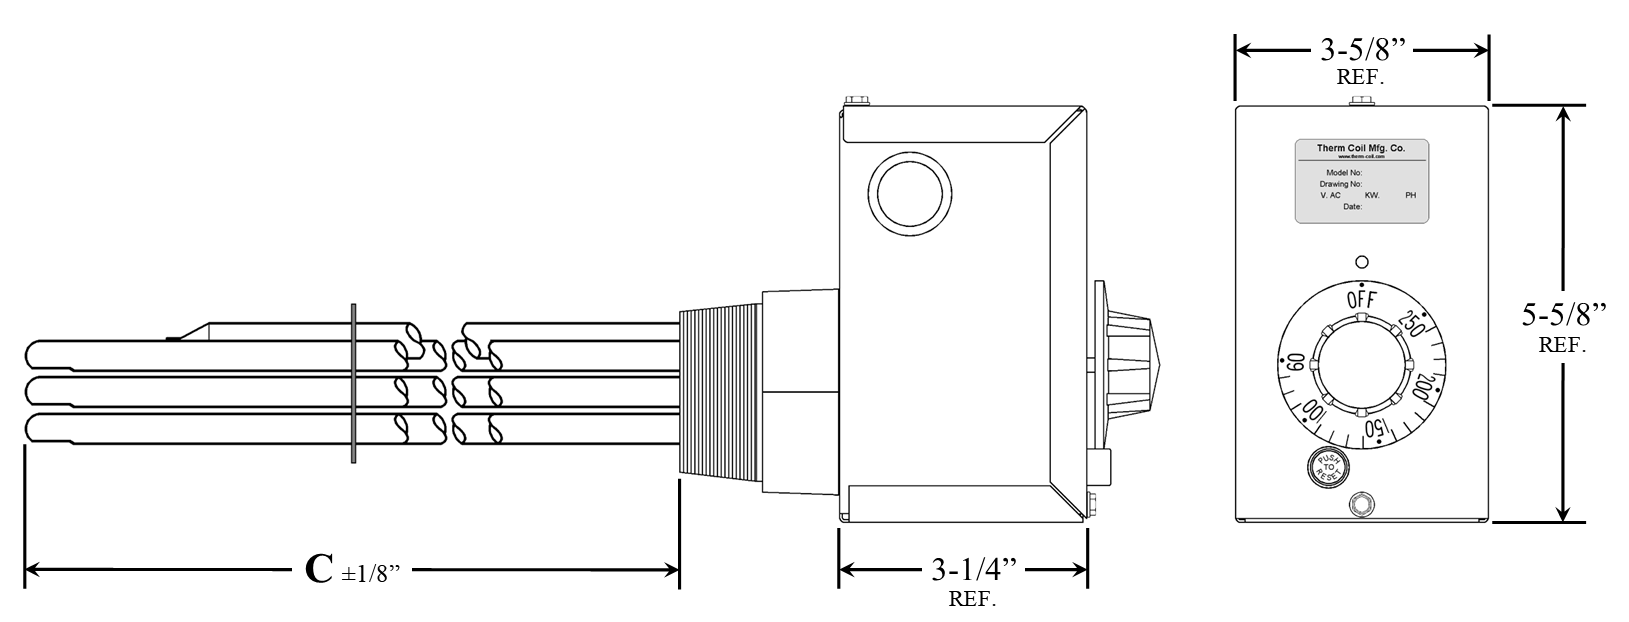 HA-7523 Model: 7500W @ 208V 3-Phase, 19" Immersion Length Regulated 2" NPT Commercial Dishwasher Heating Elements